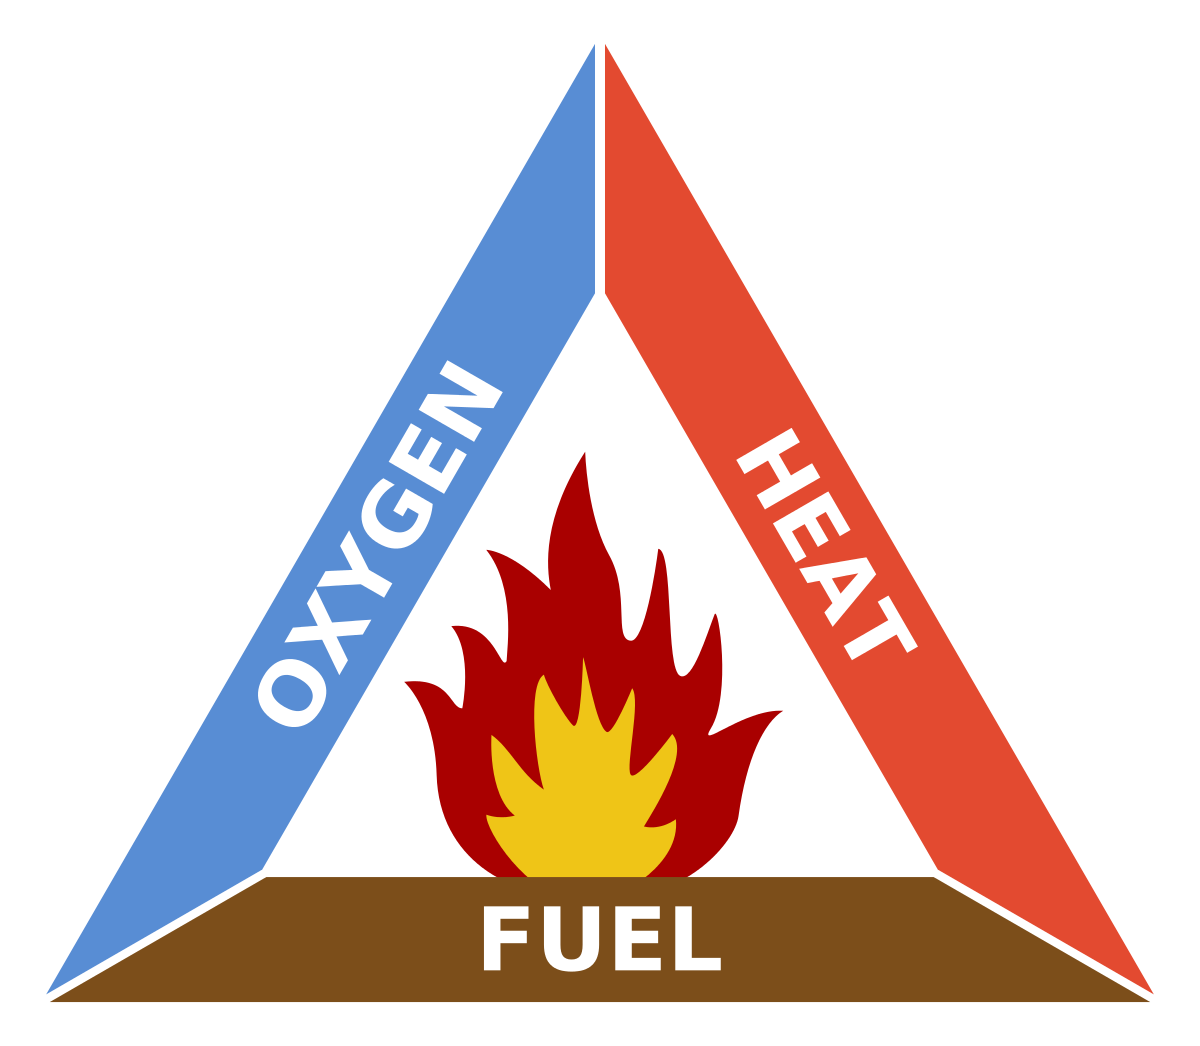 Fire triangle - Wikipedia